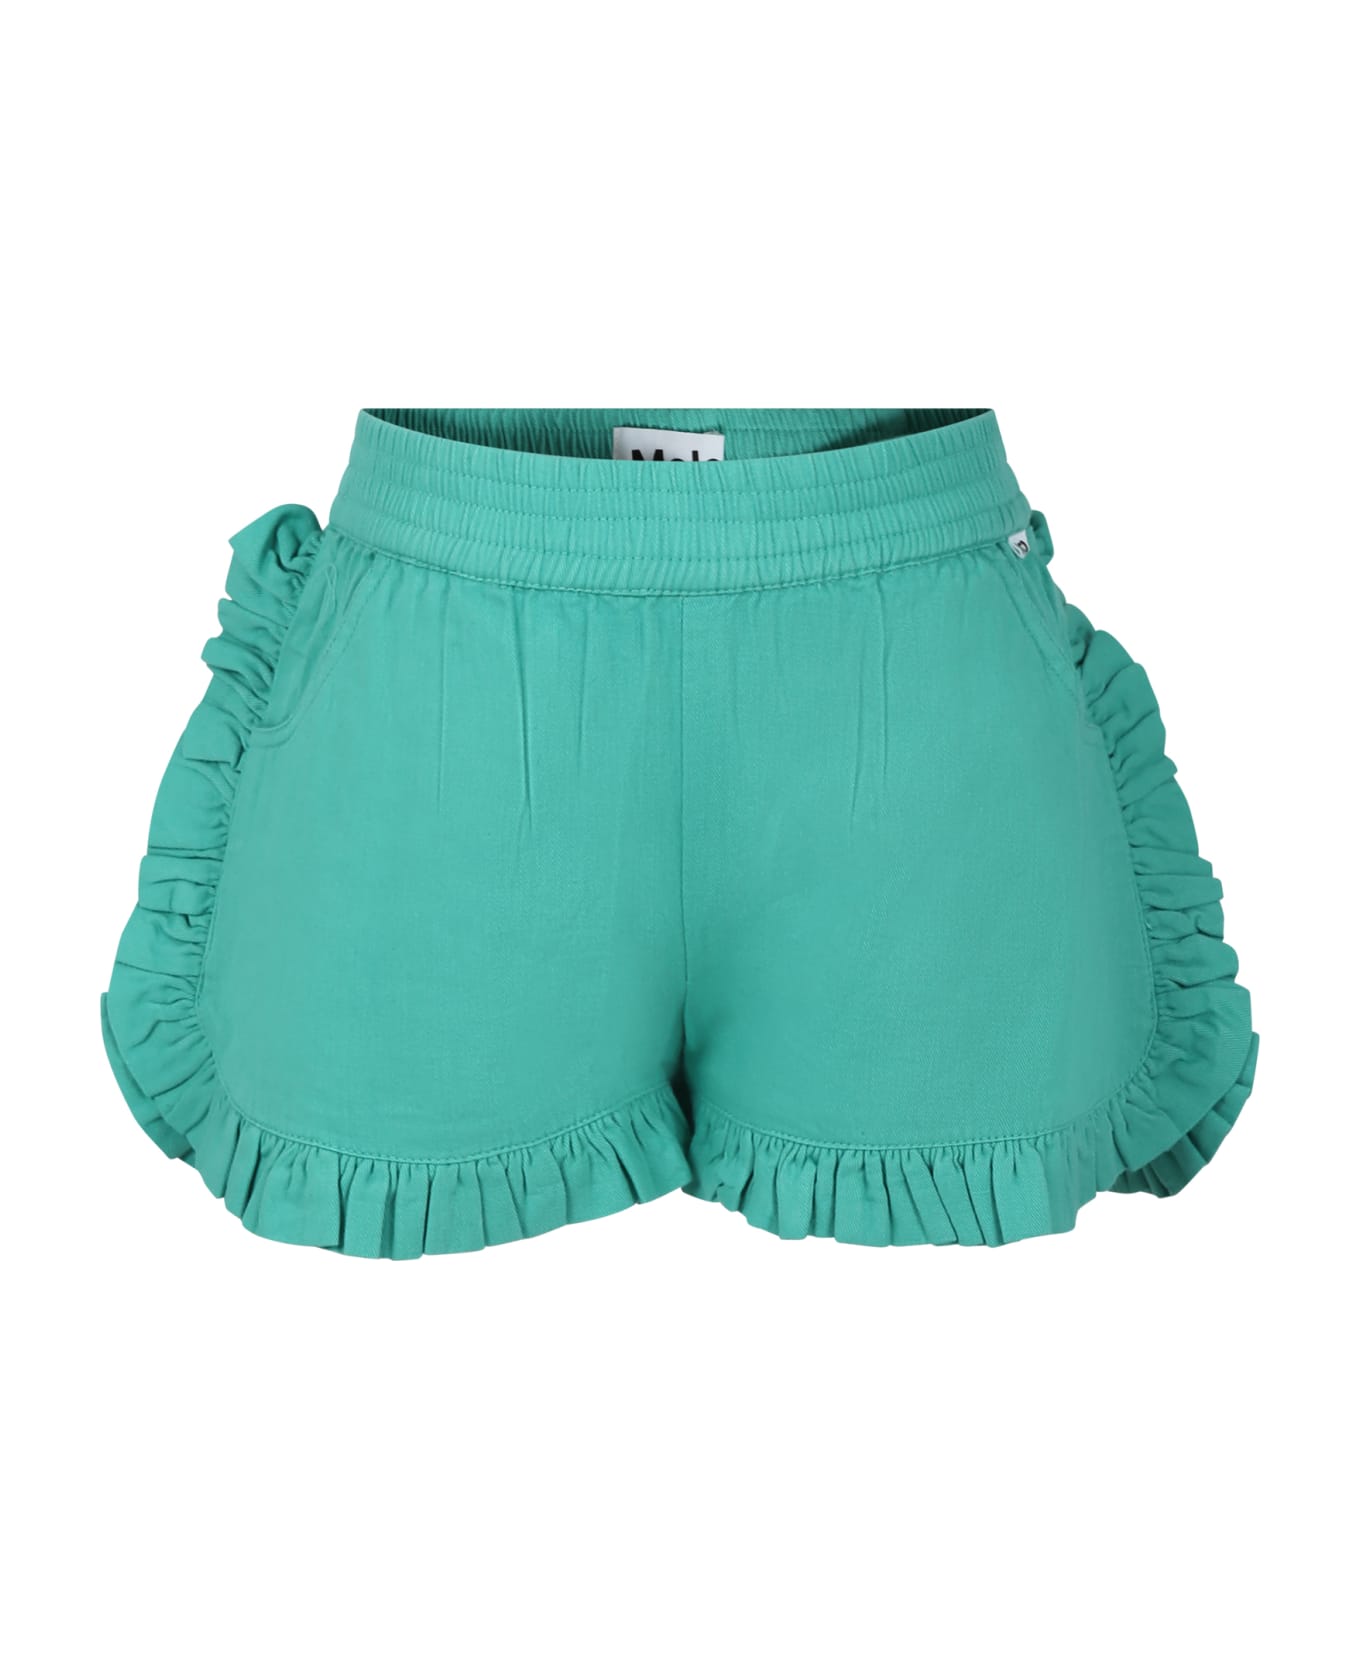 Molo Green Sports Shorts For Girl - Green